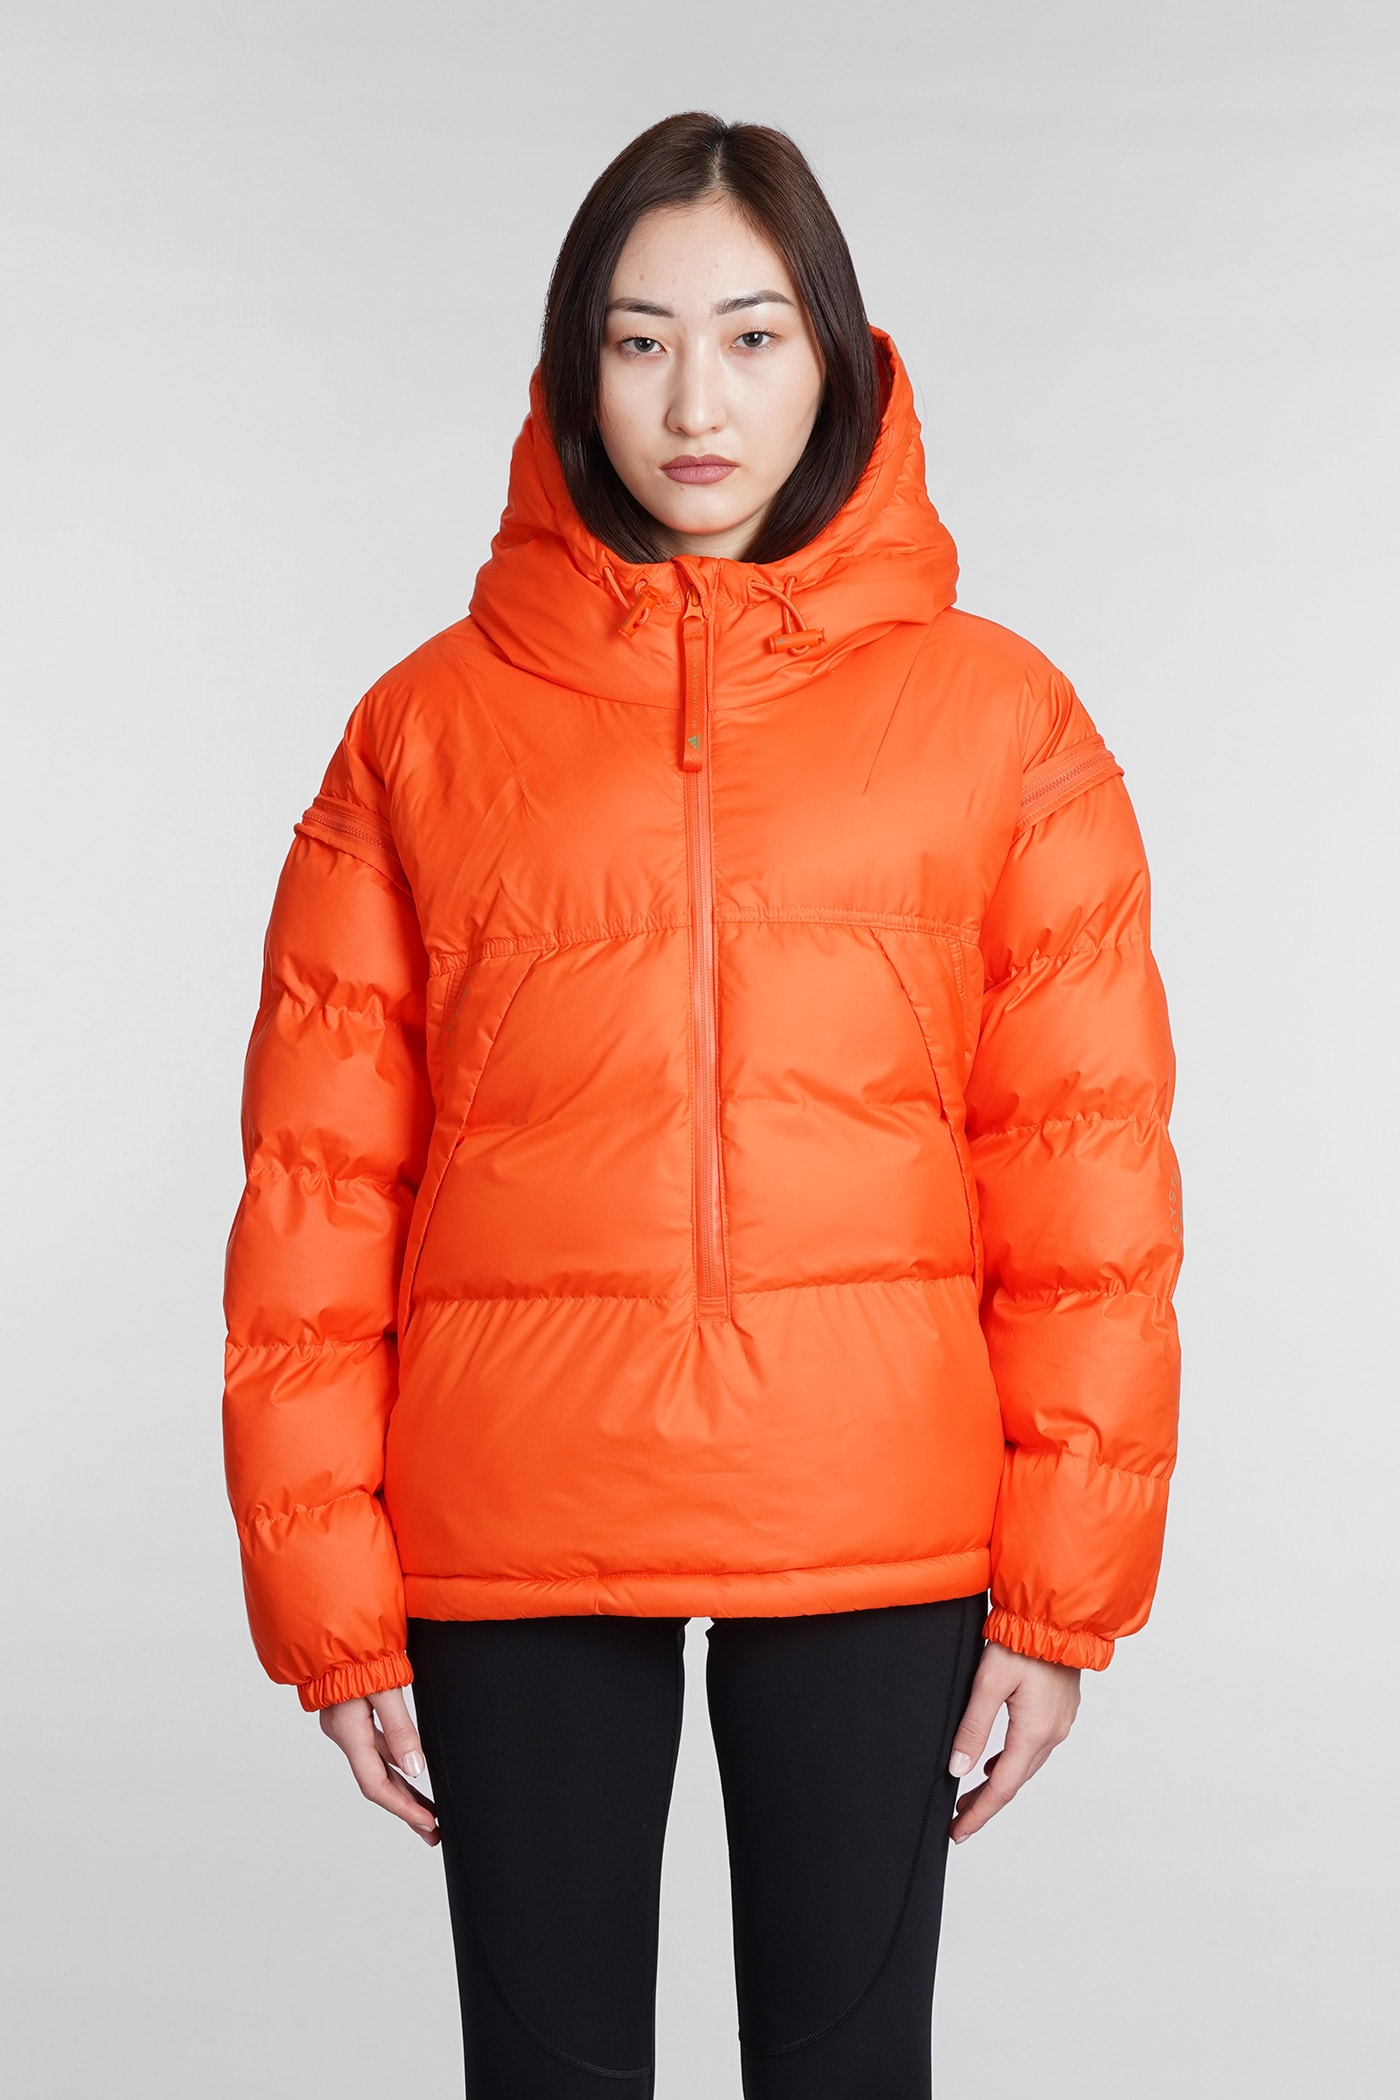 Adidas by Stella McCartney Puffer In Orange Polyester